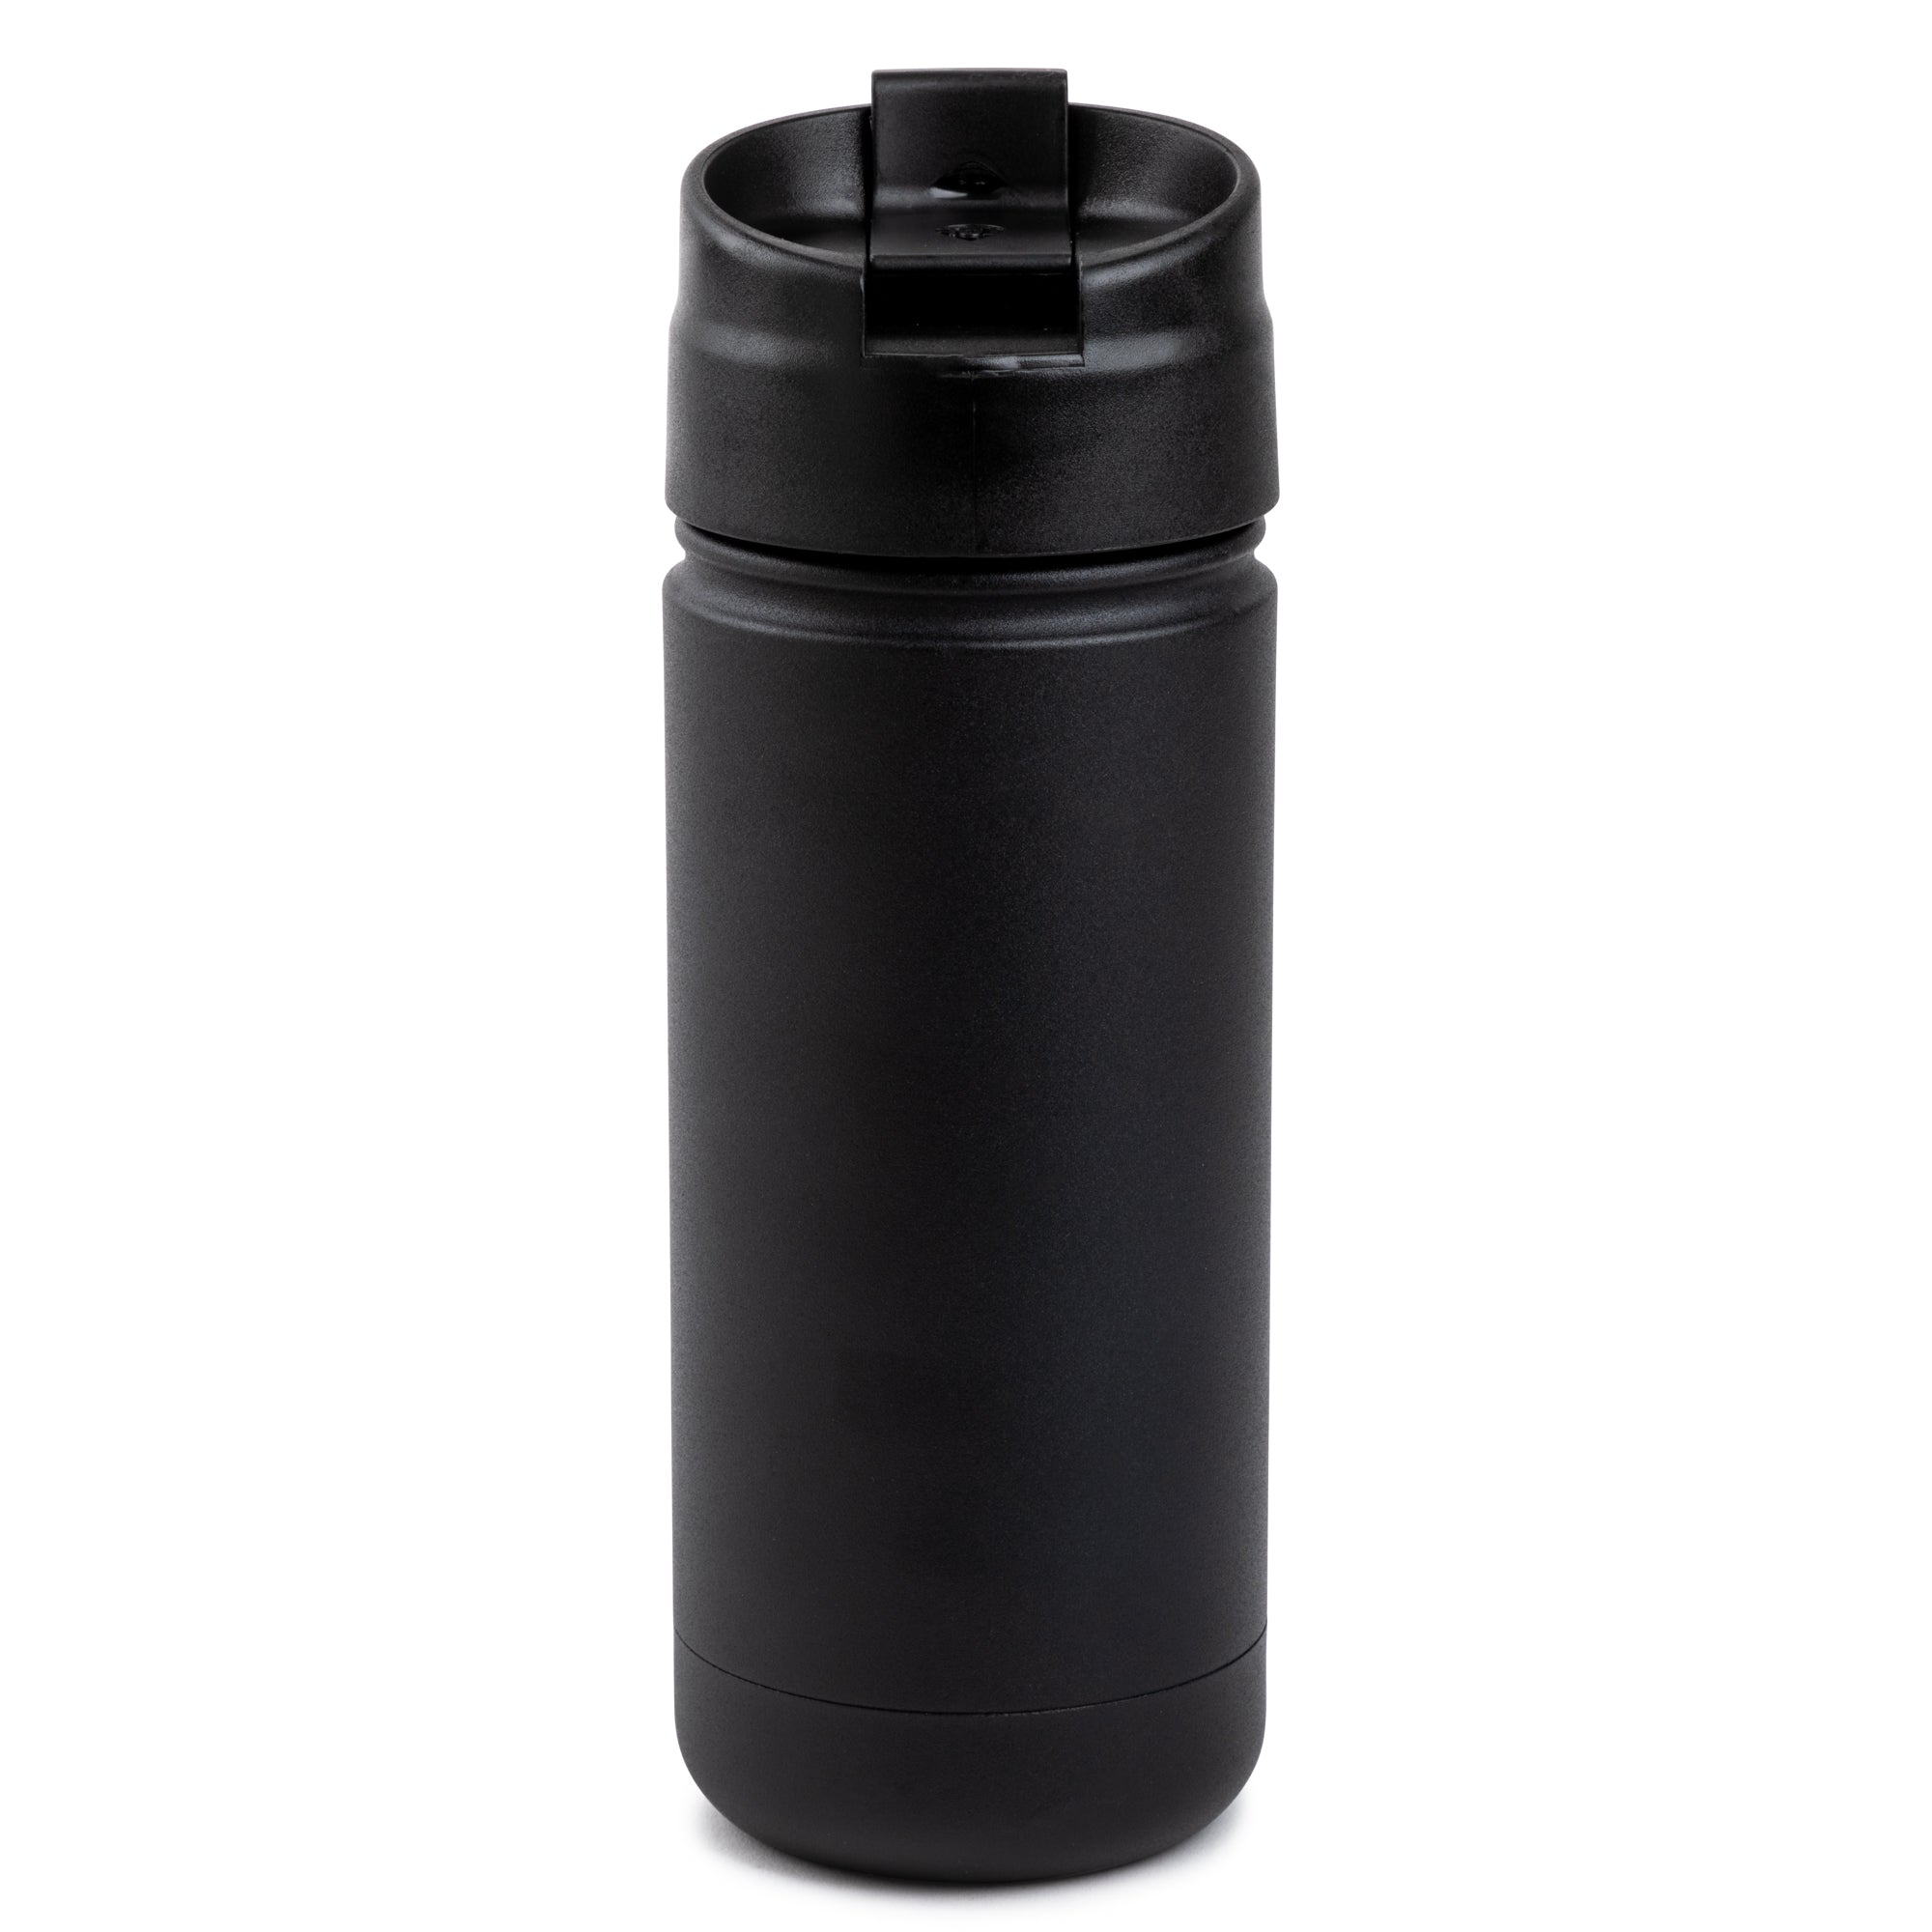 TAL Stainless Steel Magnetic Tumbler Water Bottle 20 fl oz, Black